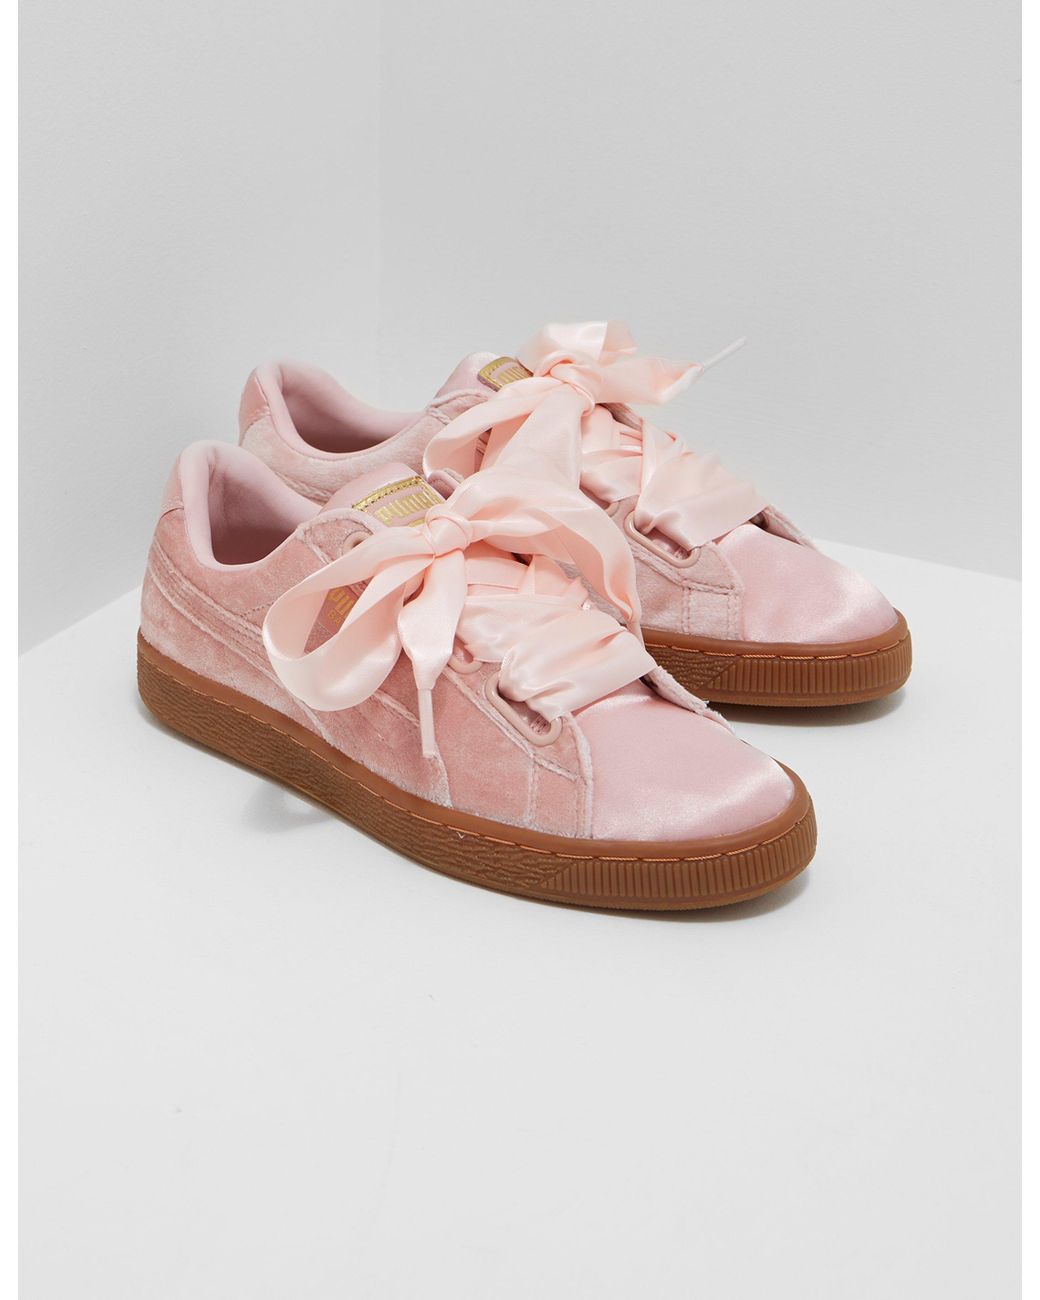 PUMA Basket Heart Sneakers In Pink Velvet | Lyst